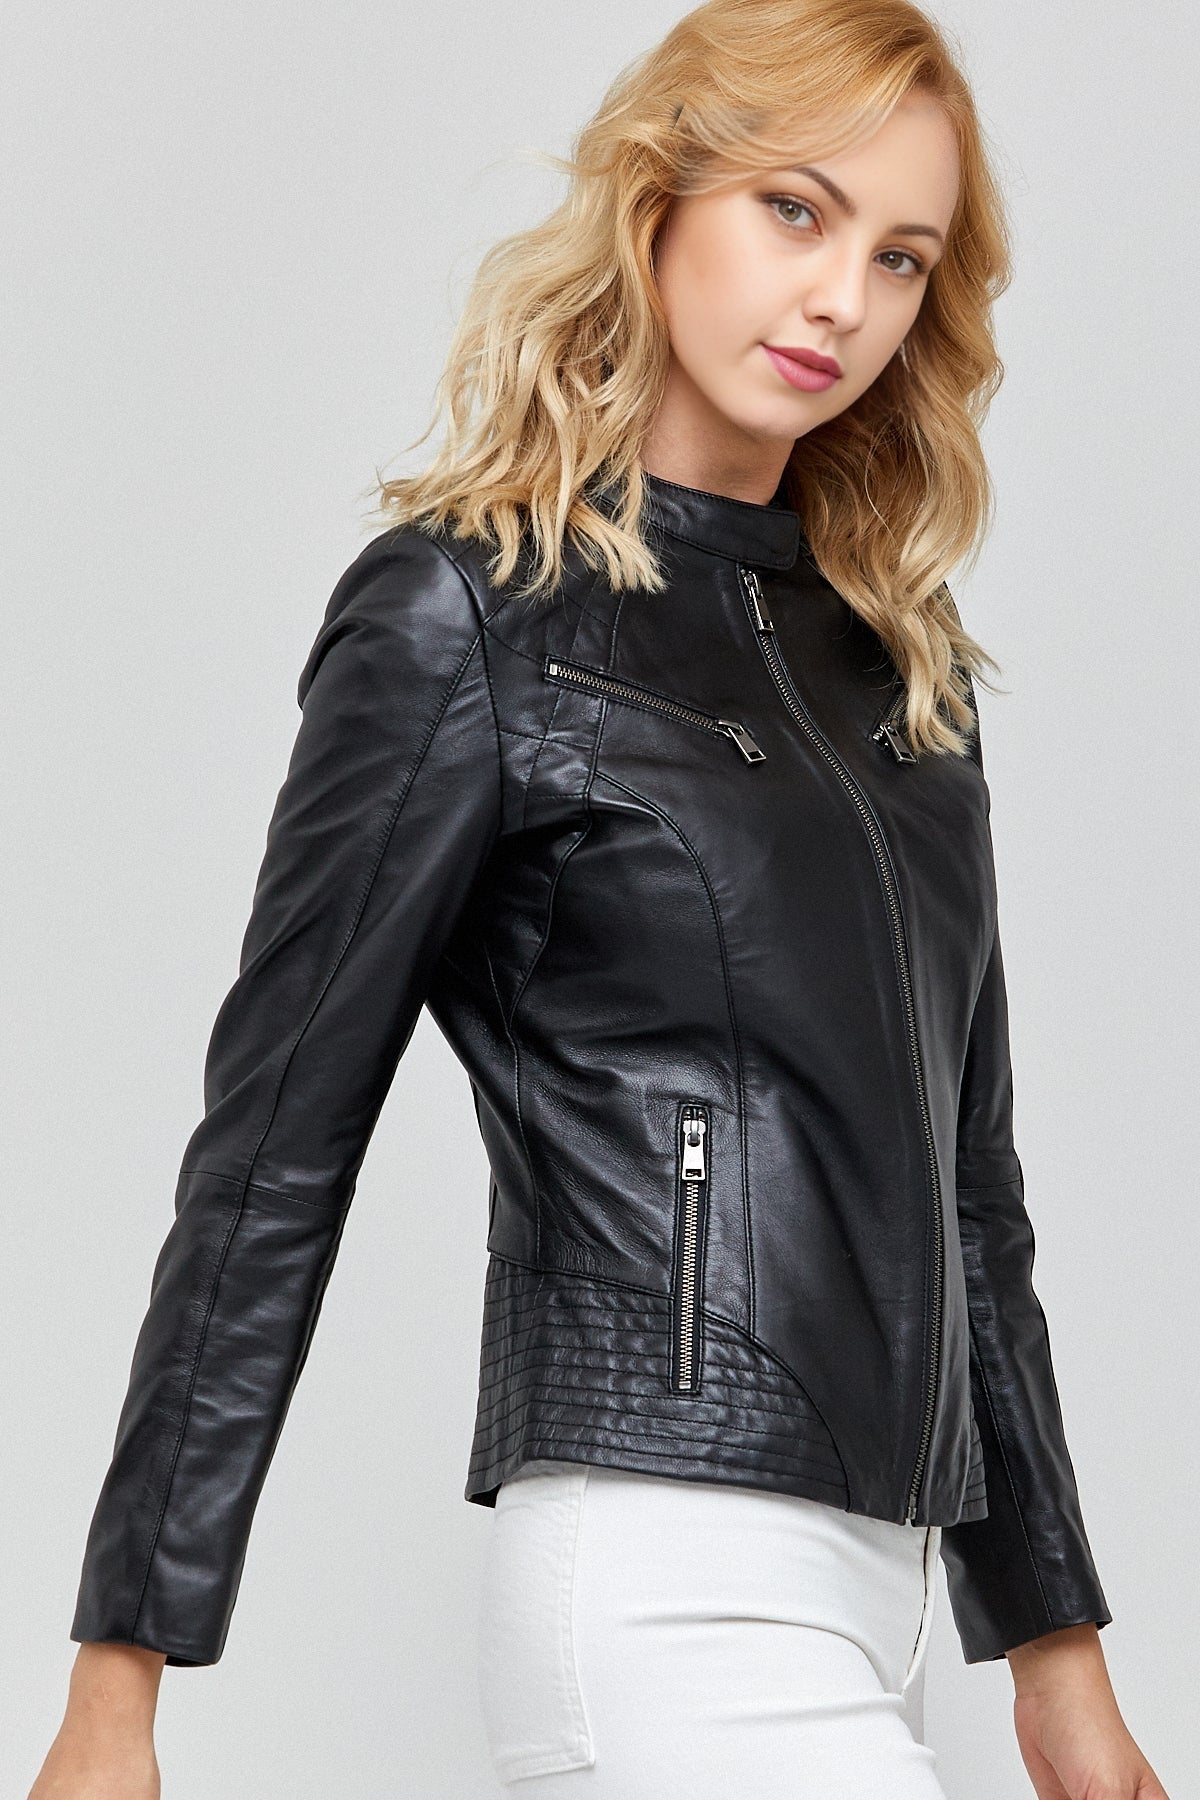 Lucky Women's Black Leather Jacket